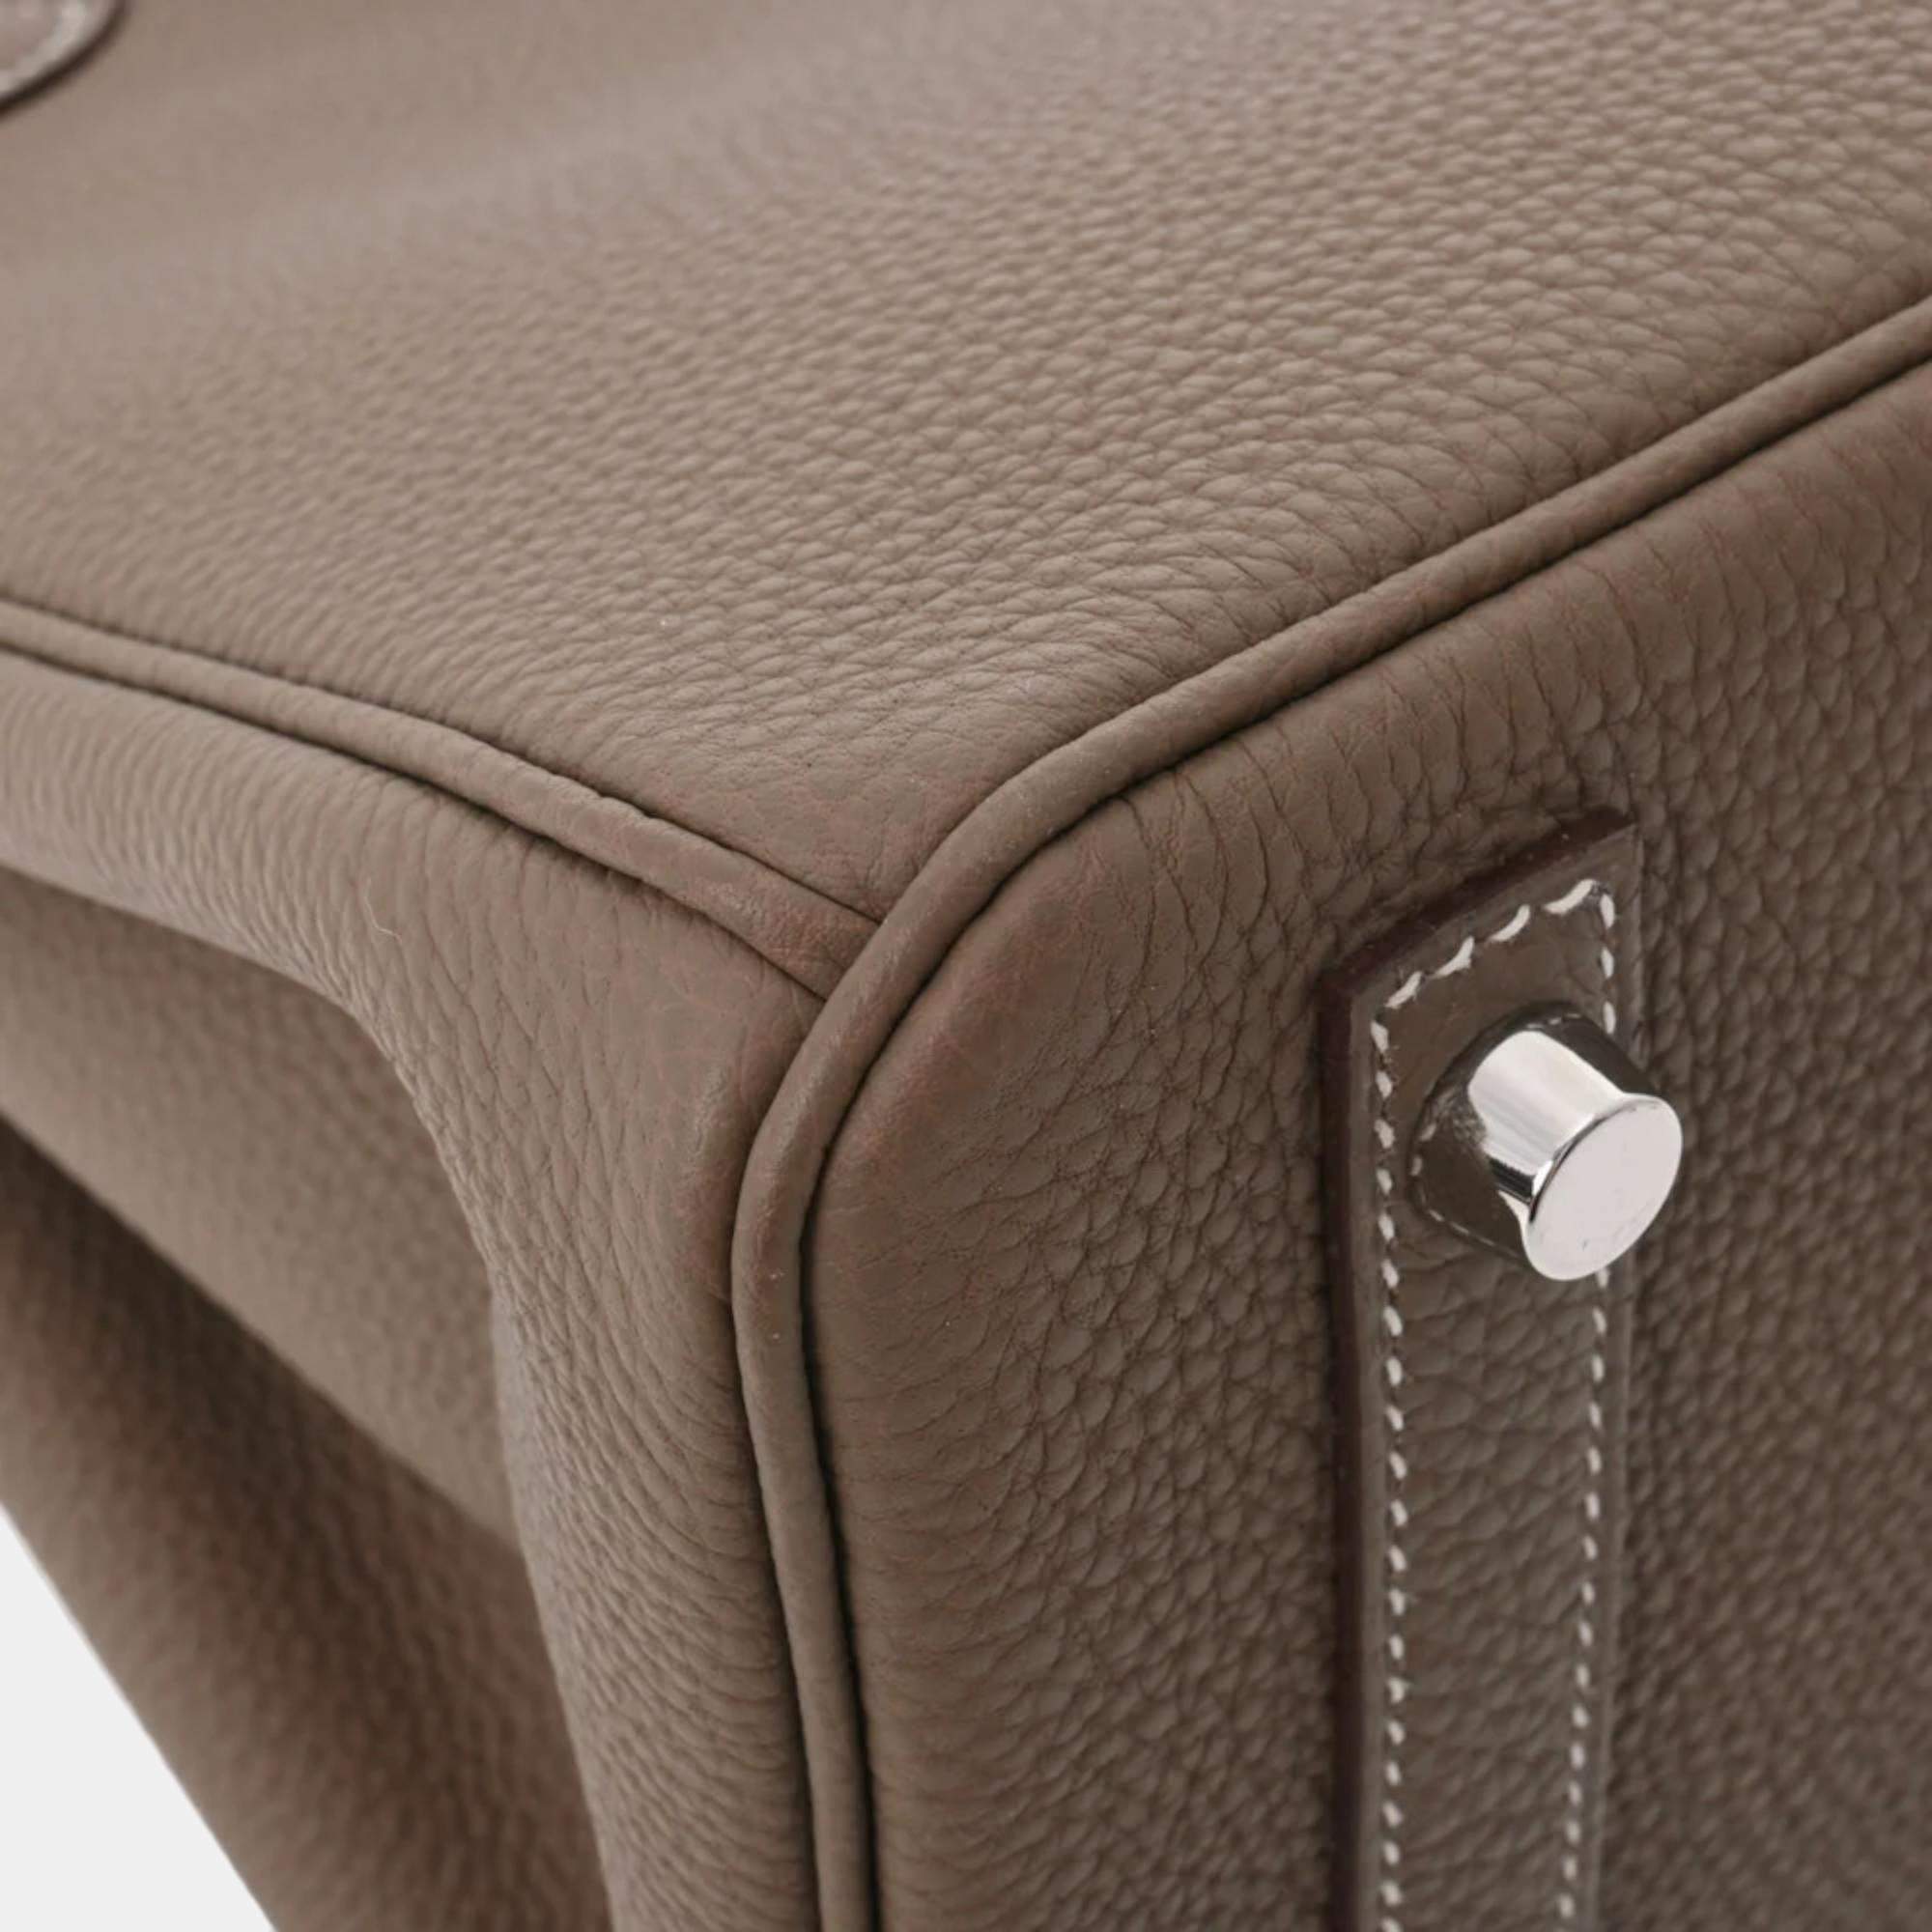 Splendid Hermès Birkin 30 in Togo leather Trench color, palladium